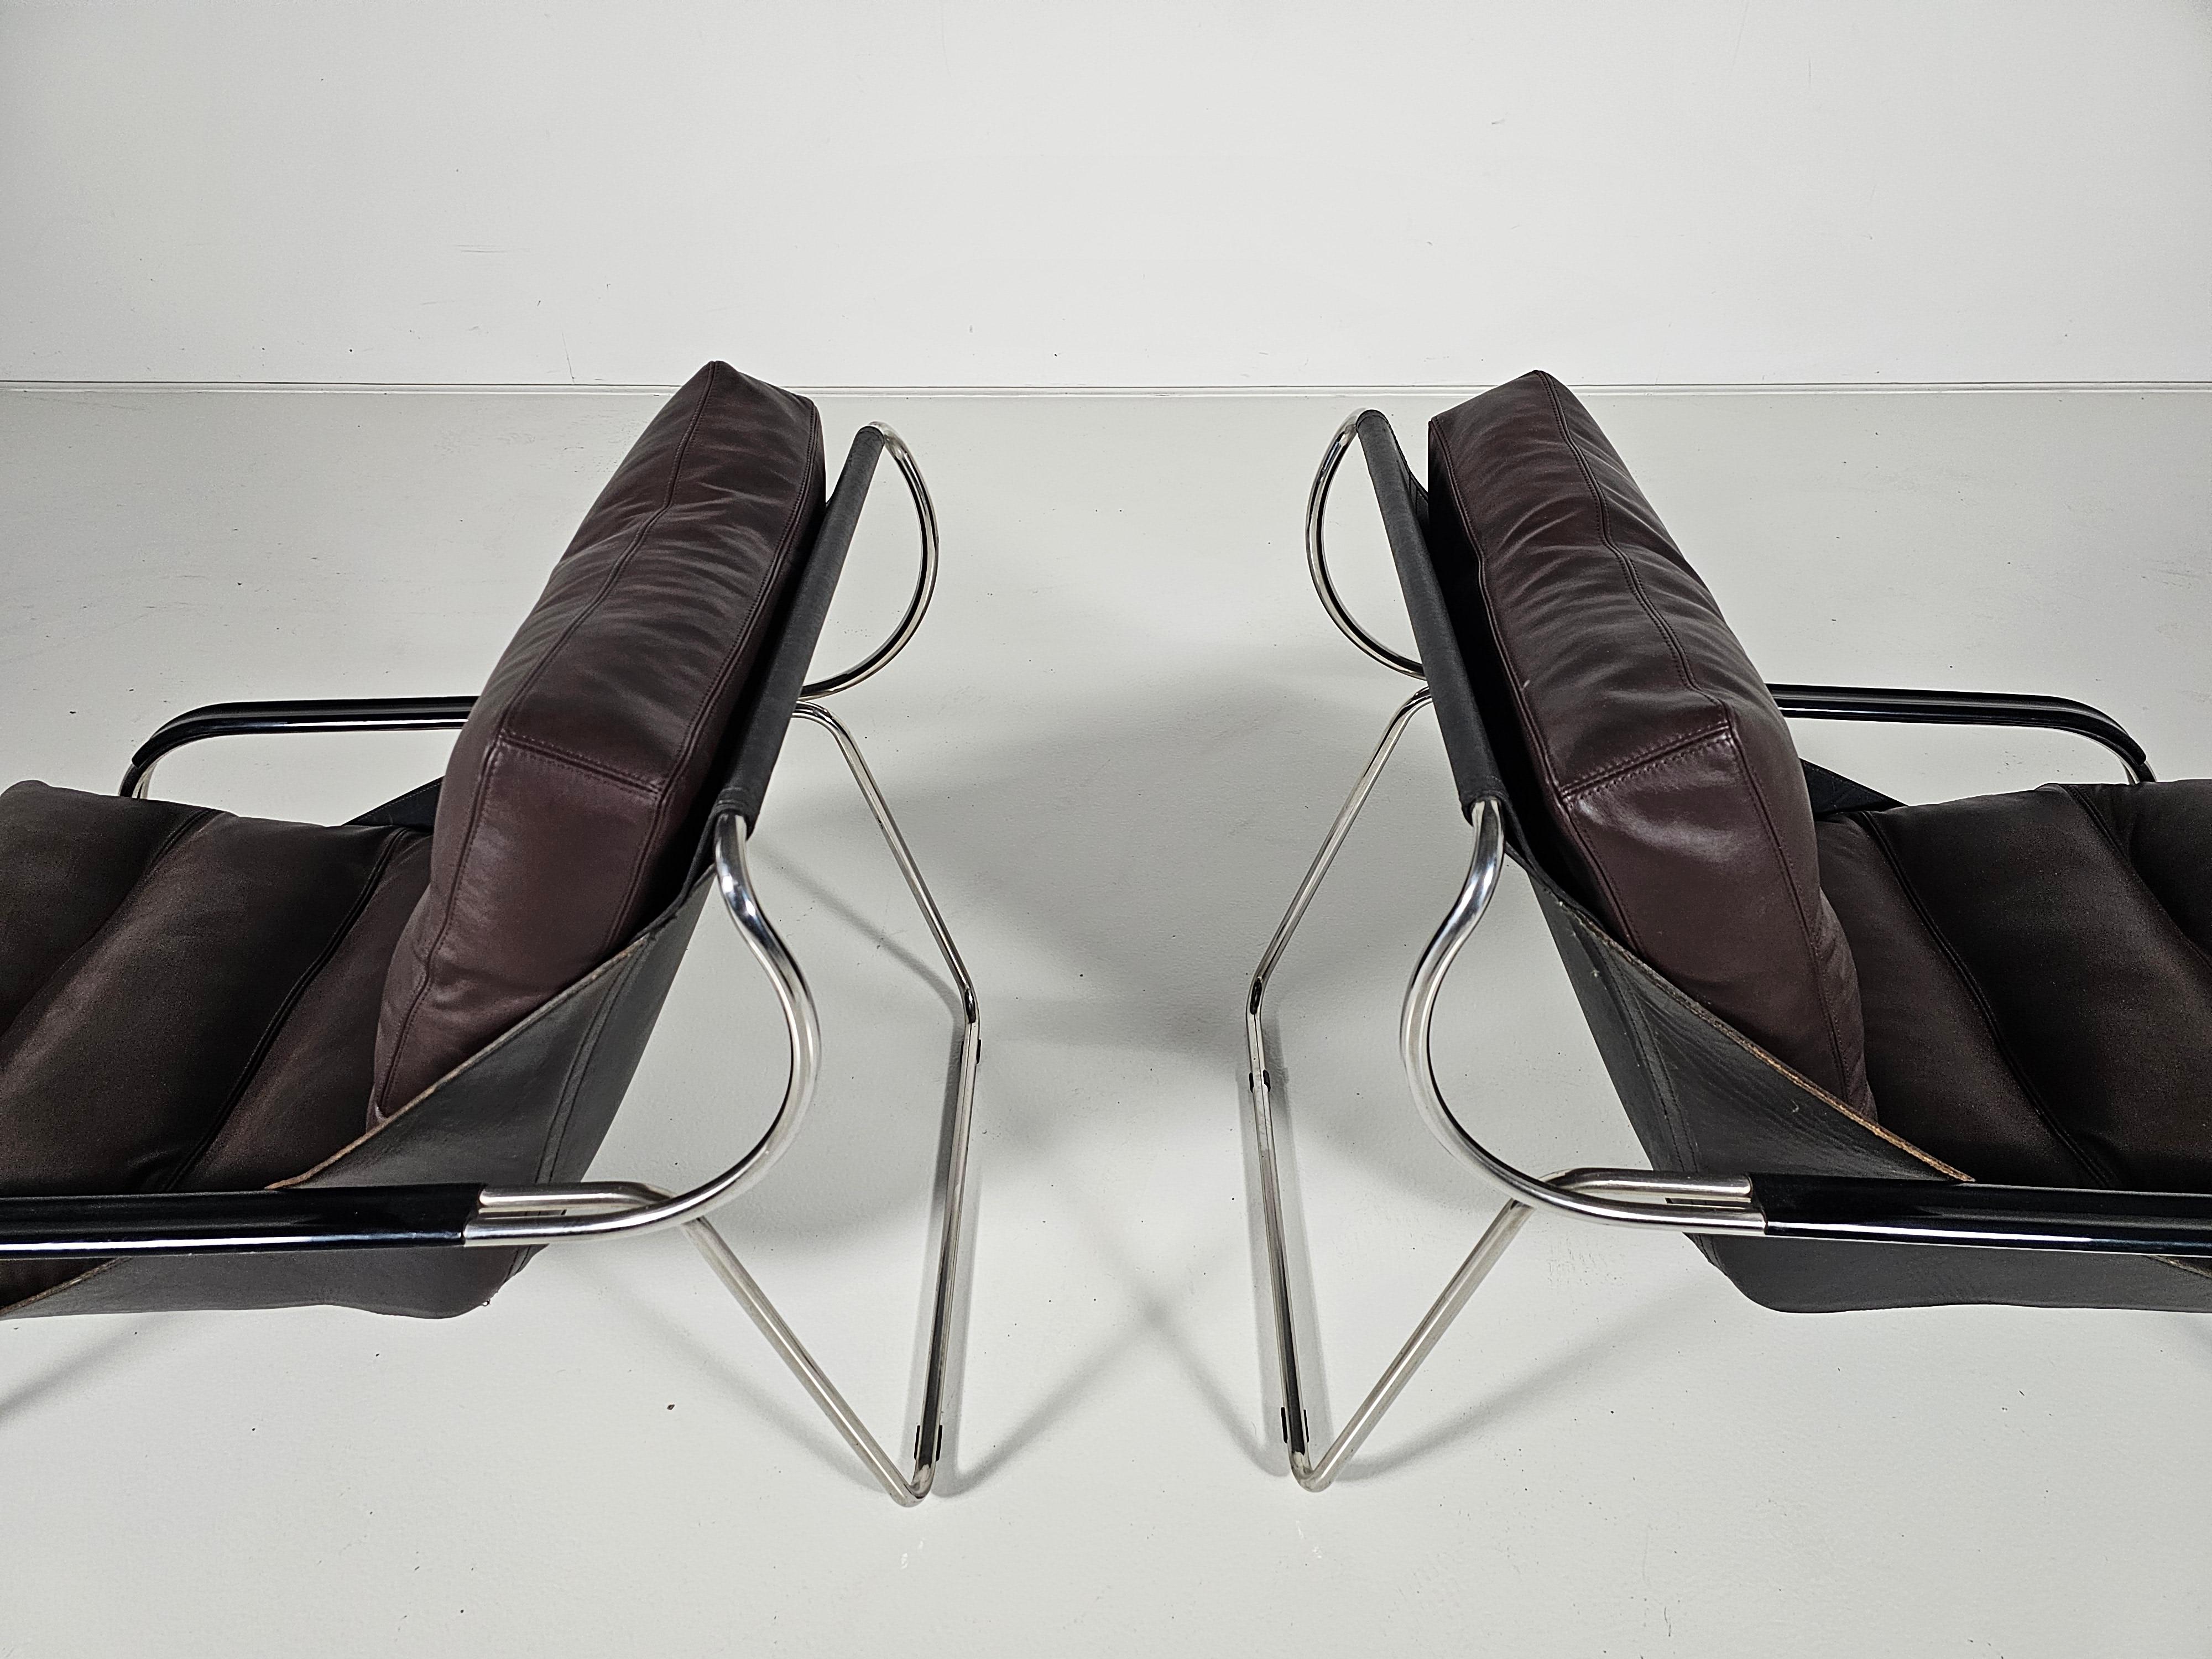  Chaises longues Marco Zanuso Maggiolina en cuir brun et noir, Zanotta, 1950 en vente 2